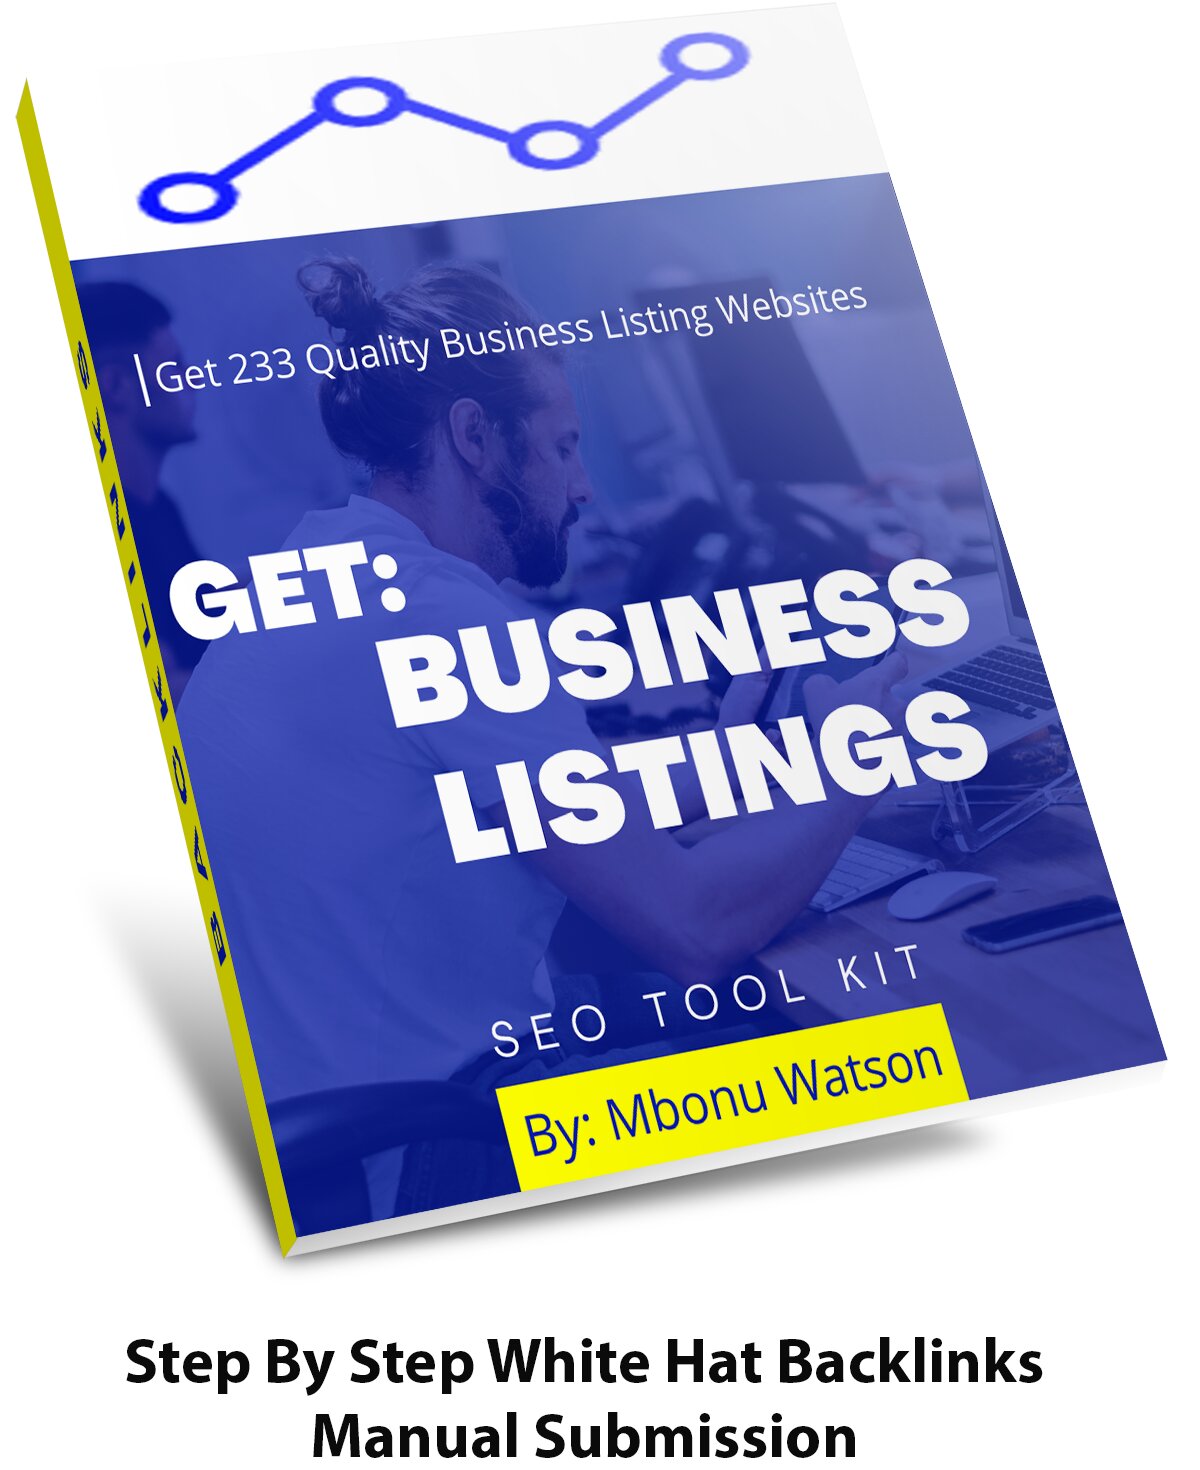 Business Listings websites, worldsocio.jpg